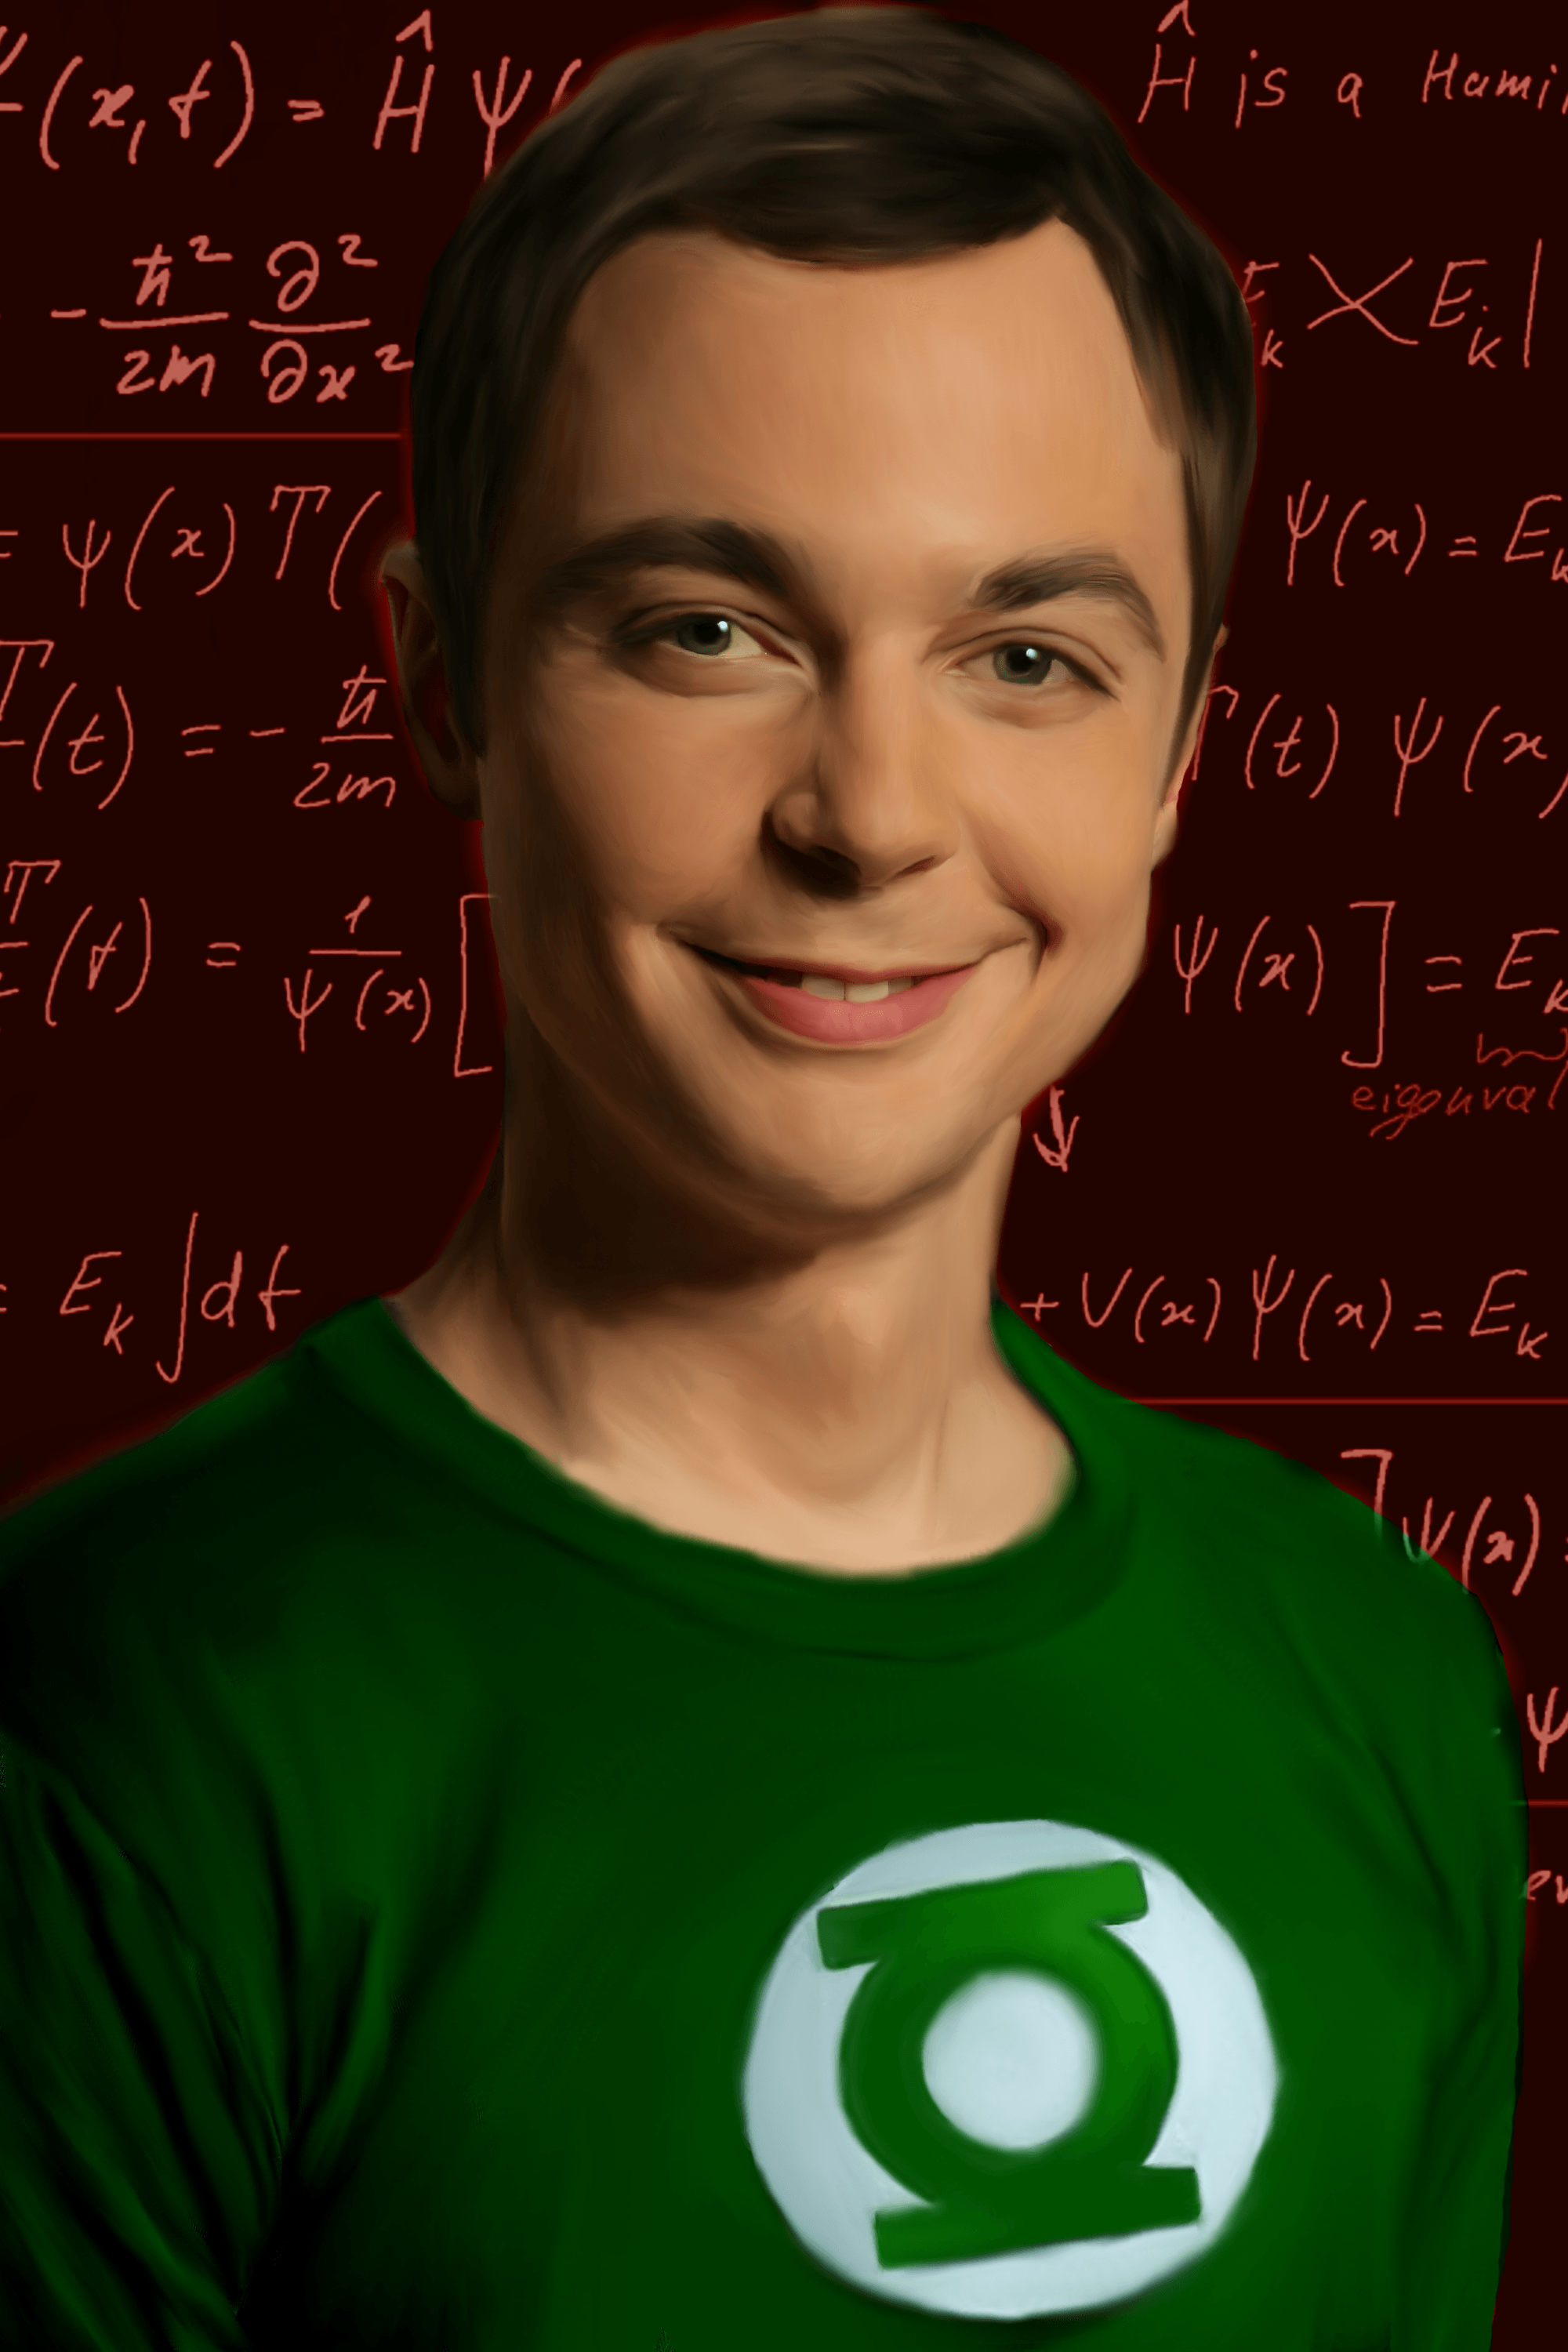 Sheldon Cooper HD Wallpaper for desktop download